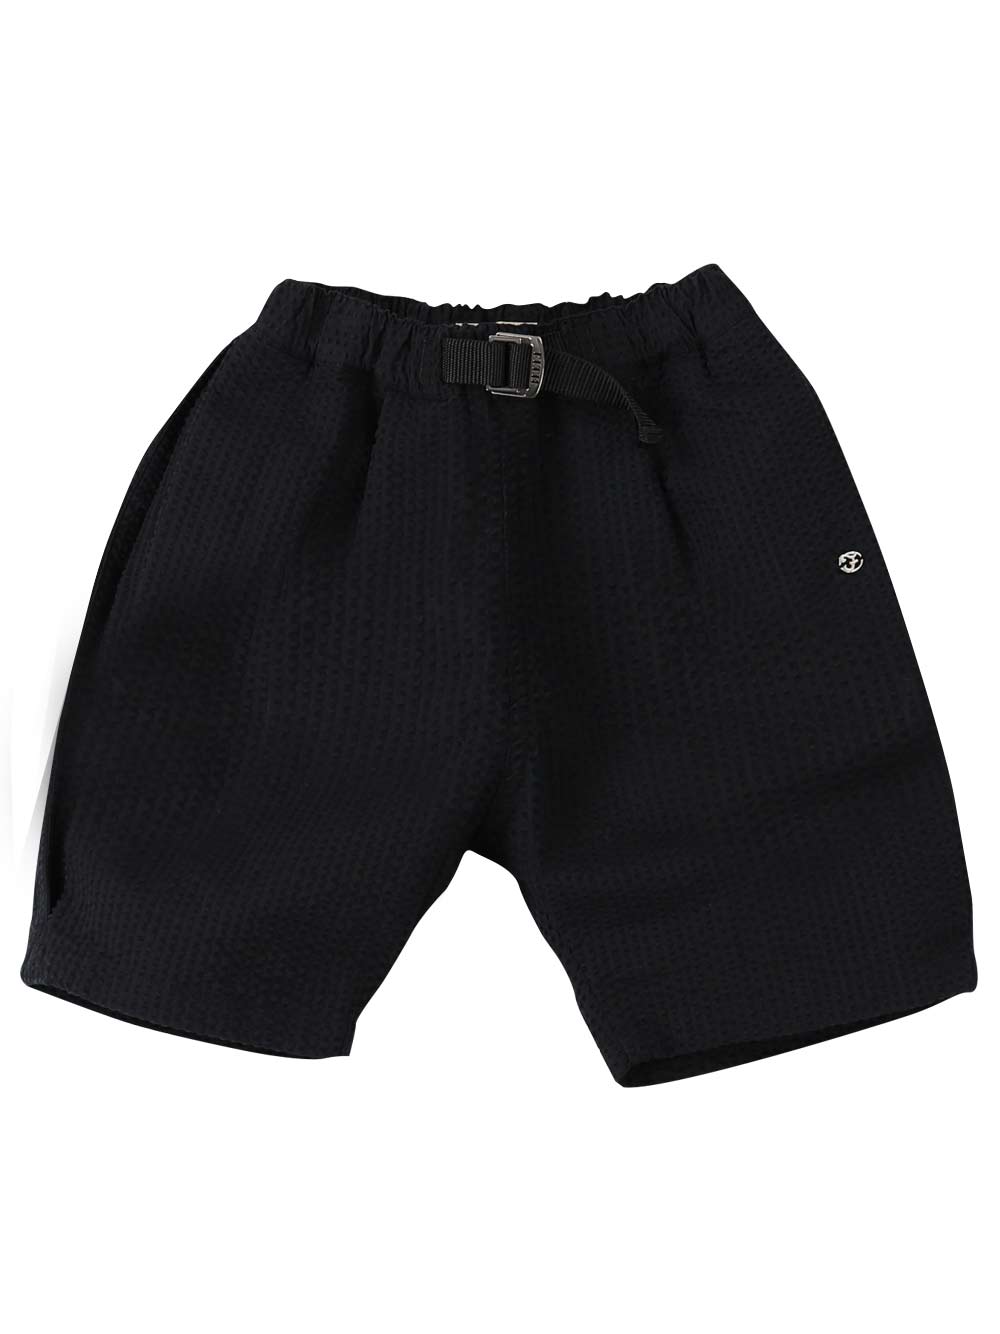 Black Coolmax Shorts